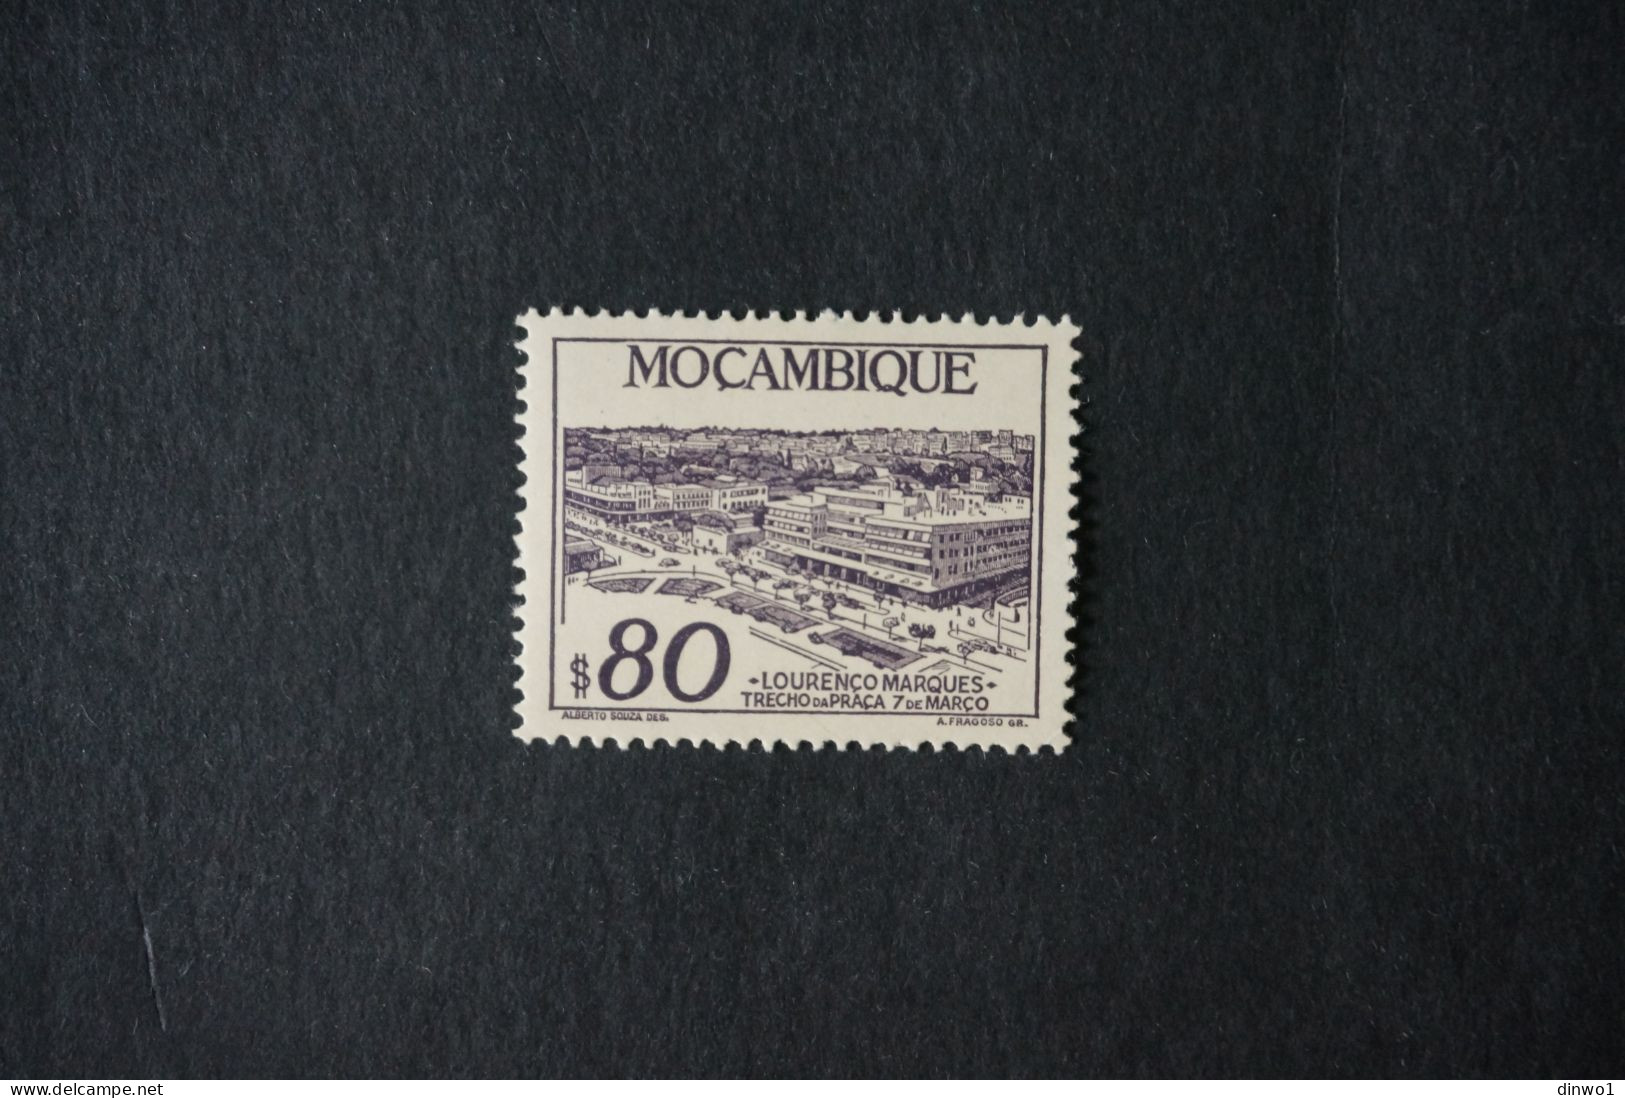 (T3) Mozambique - 1948 Local Views $80 - MNH - Mozambique